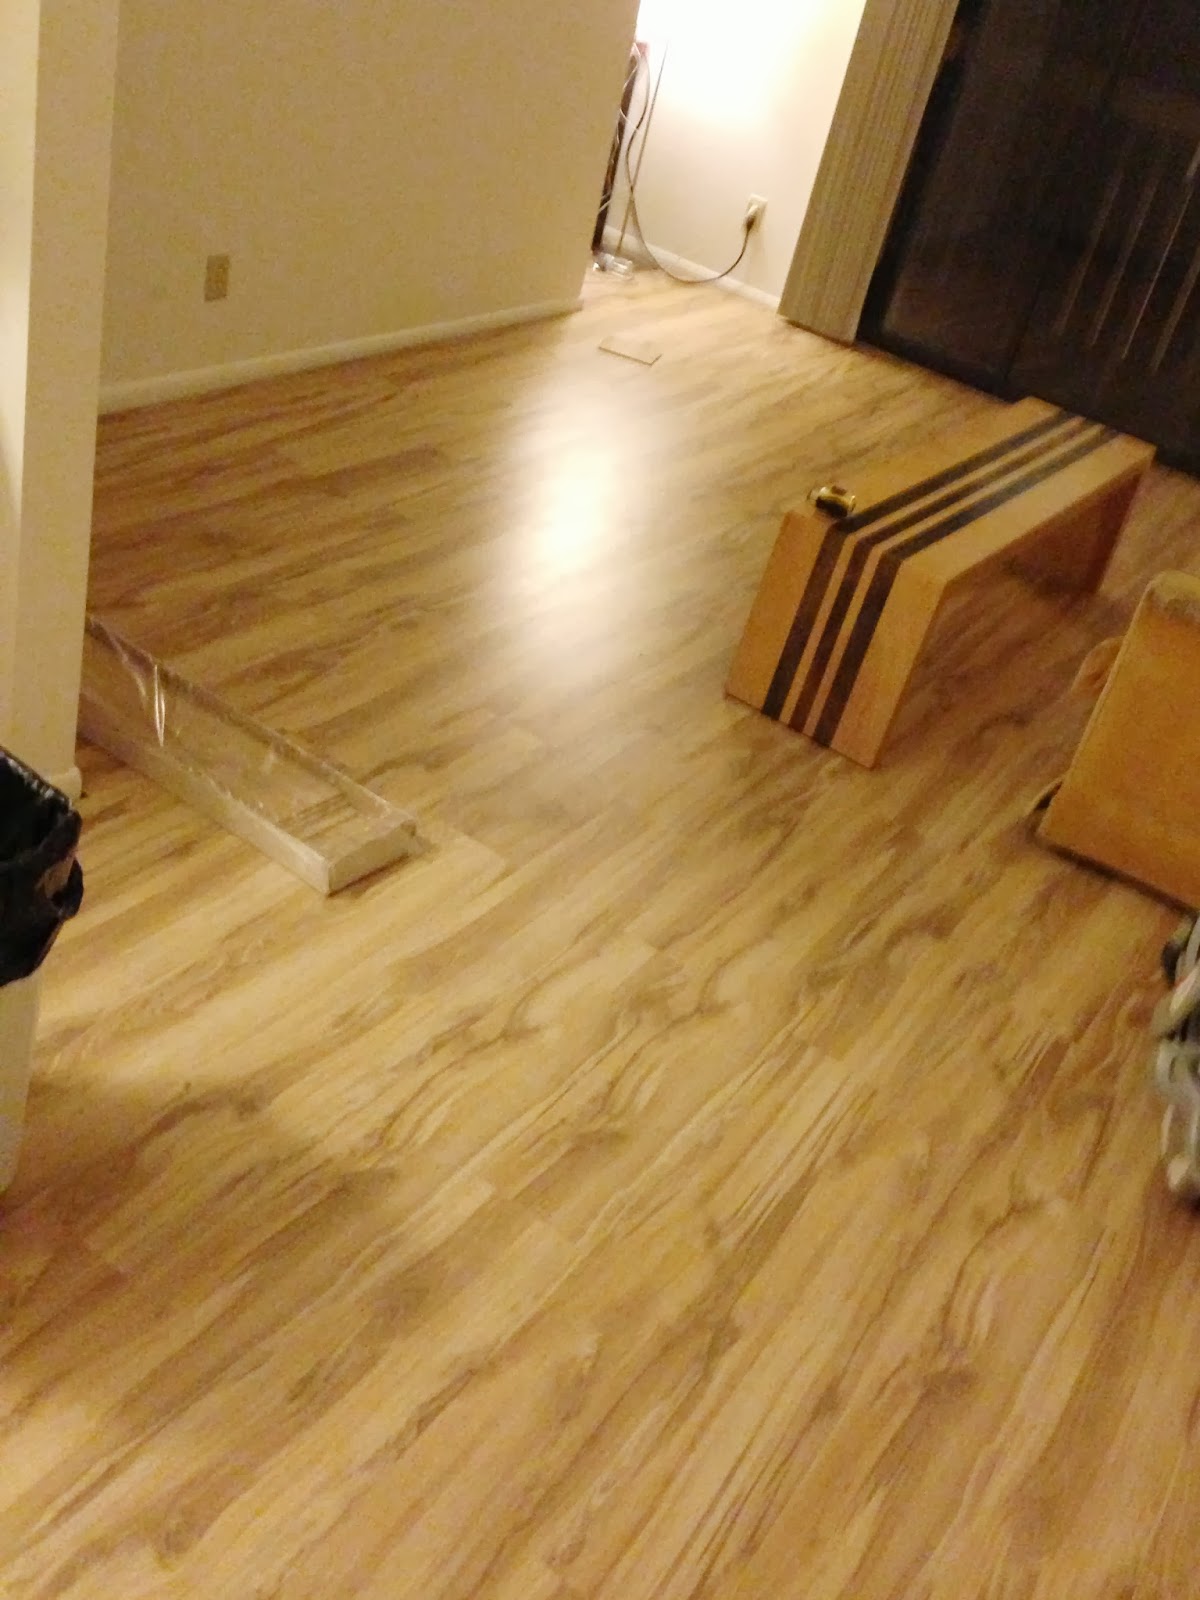 How We Put Hardwood Over Carpet Messymom, Can I Put Laminate Flooring On Top Of Carpet